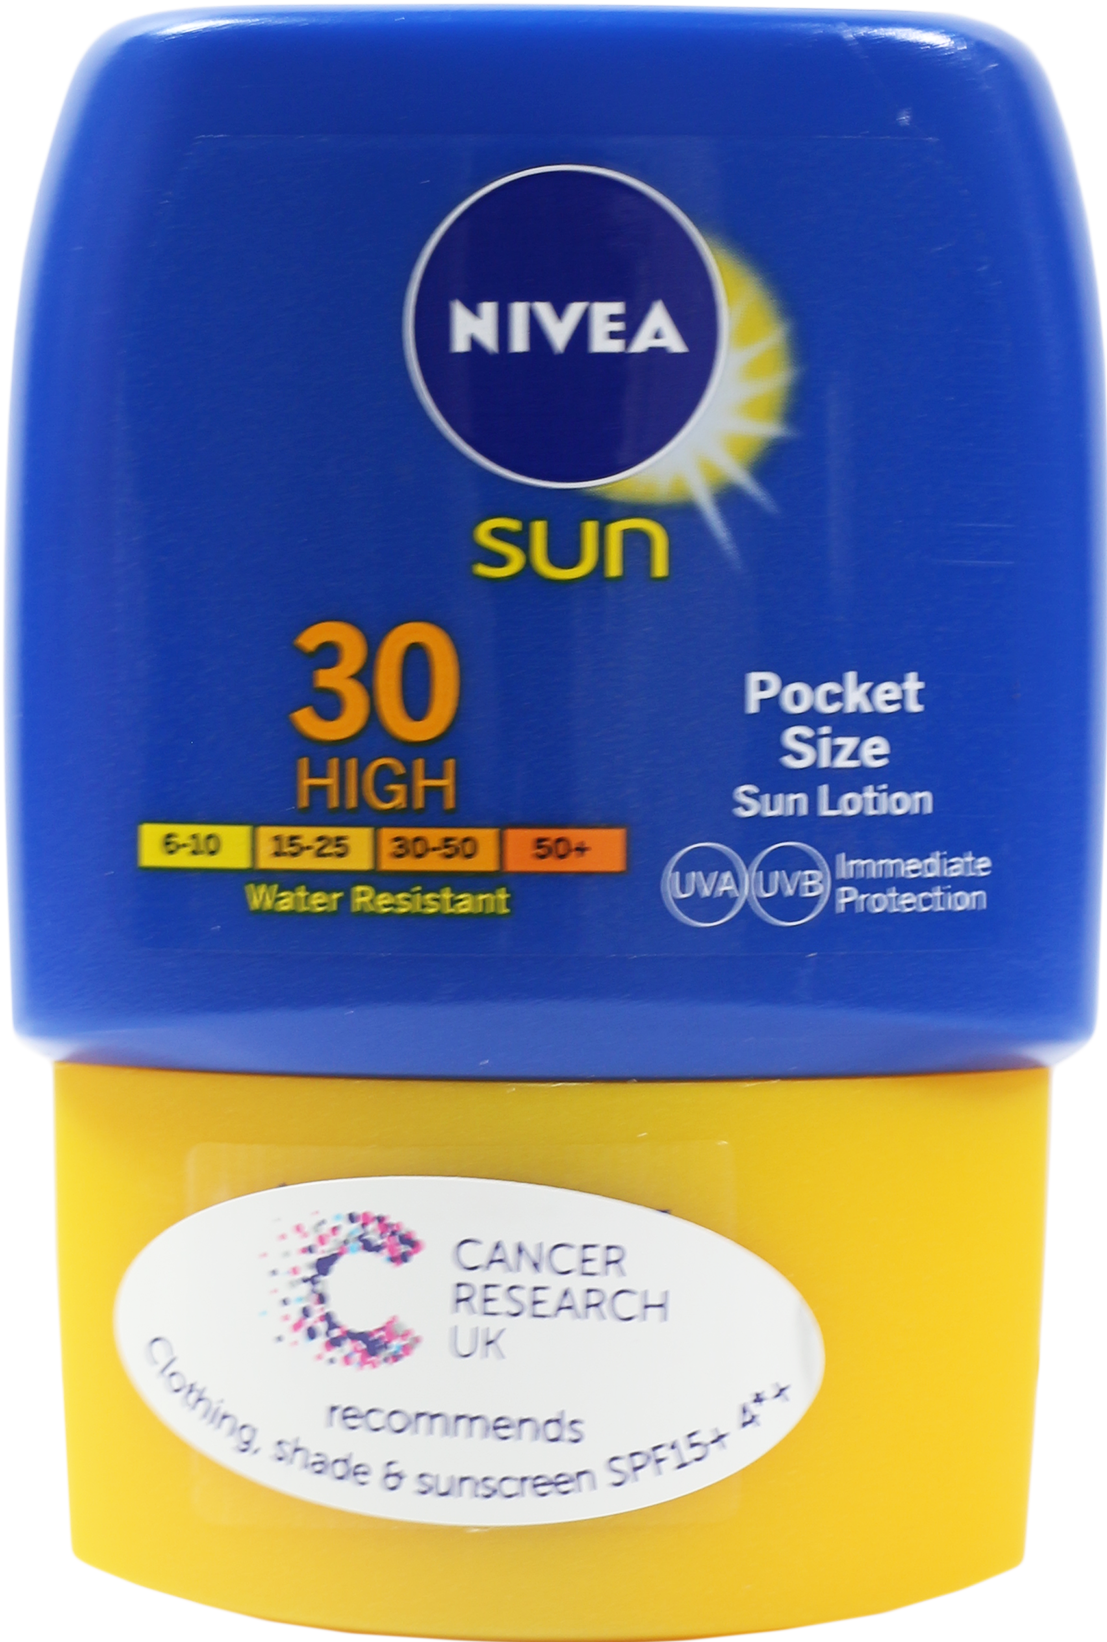 Nivea Sun Lotion Pocket Pack Adult SPF 30 50ml